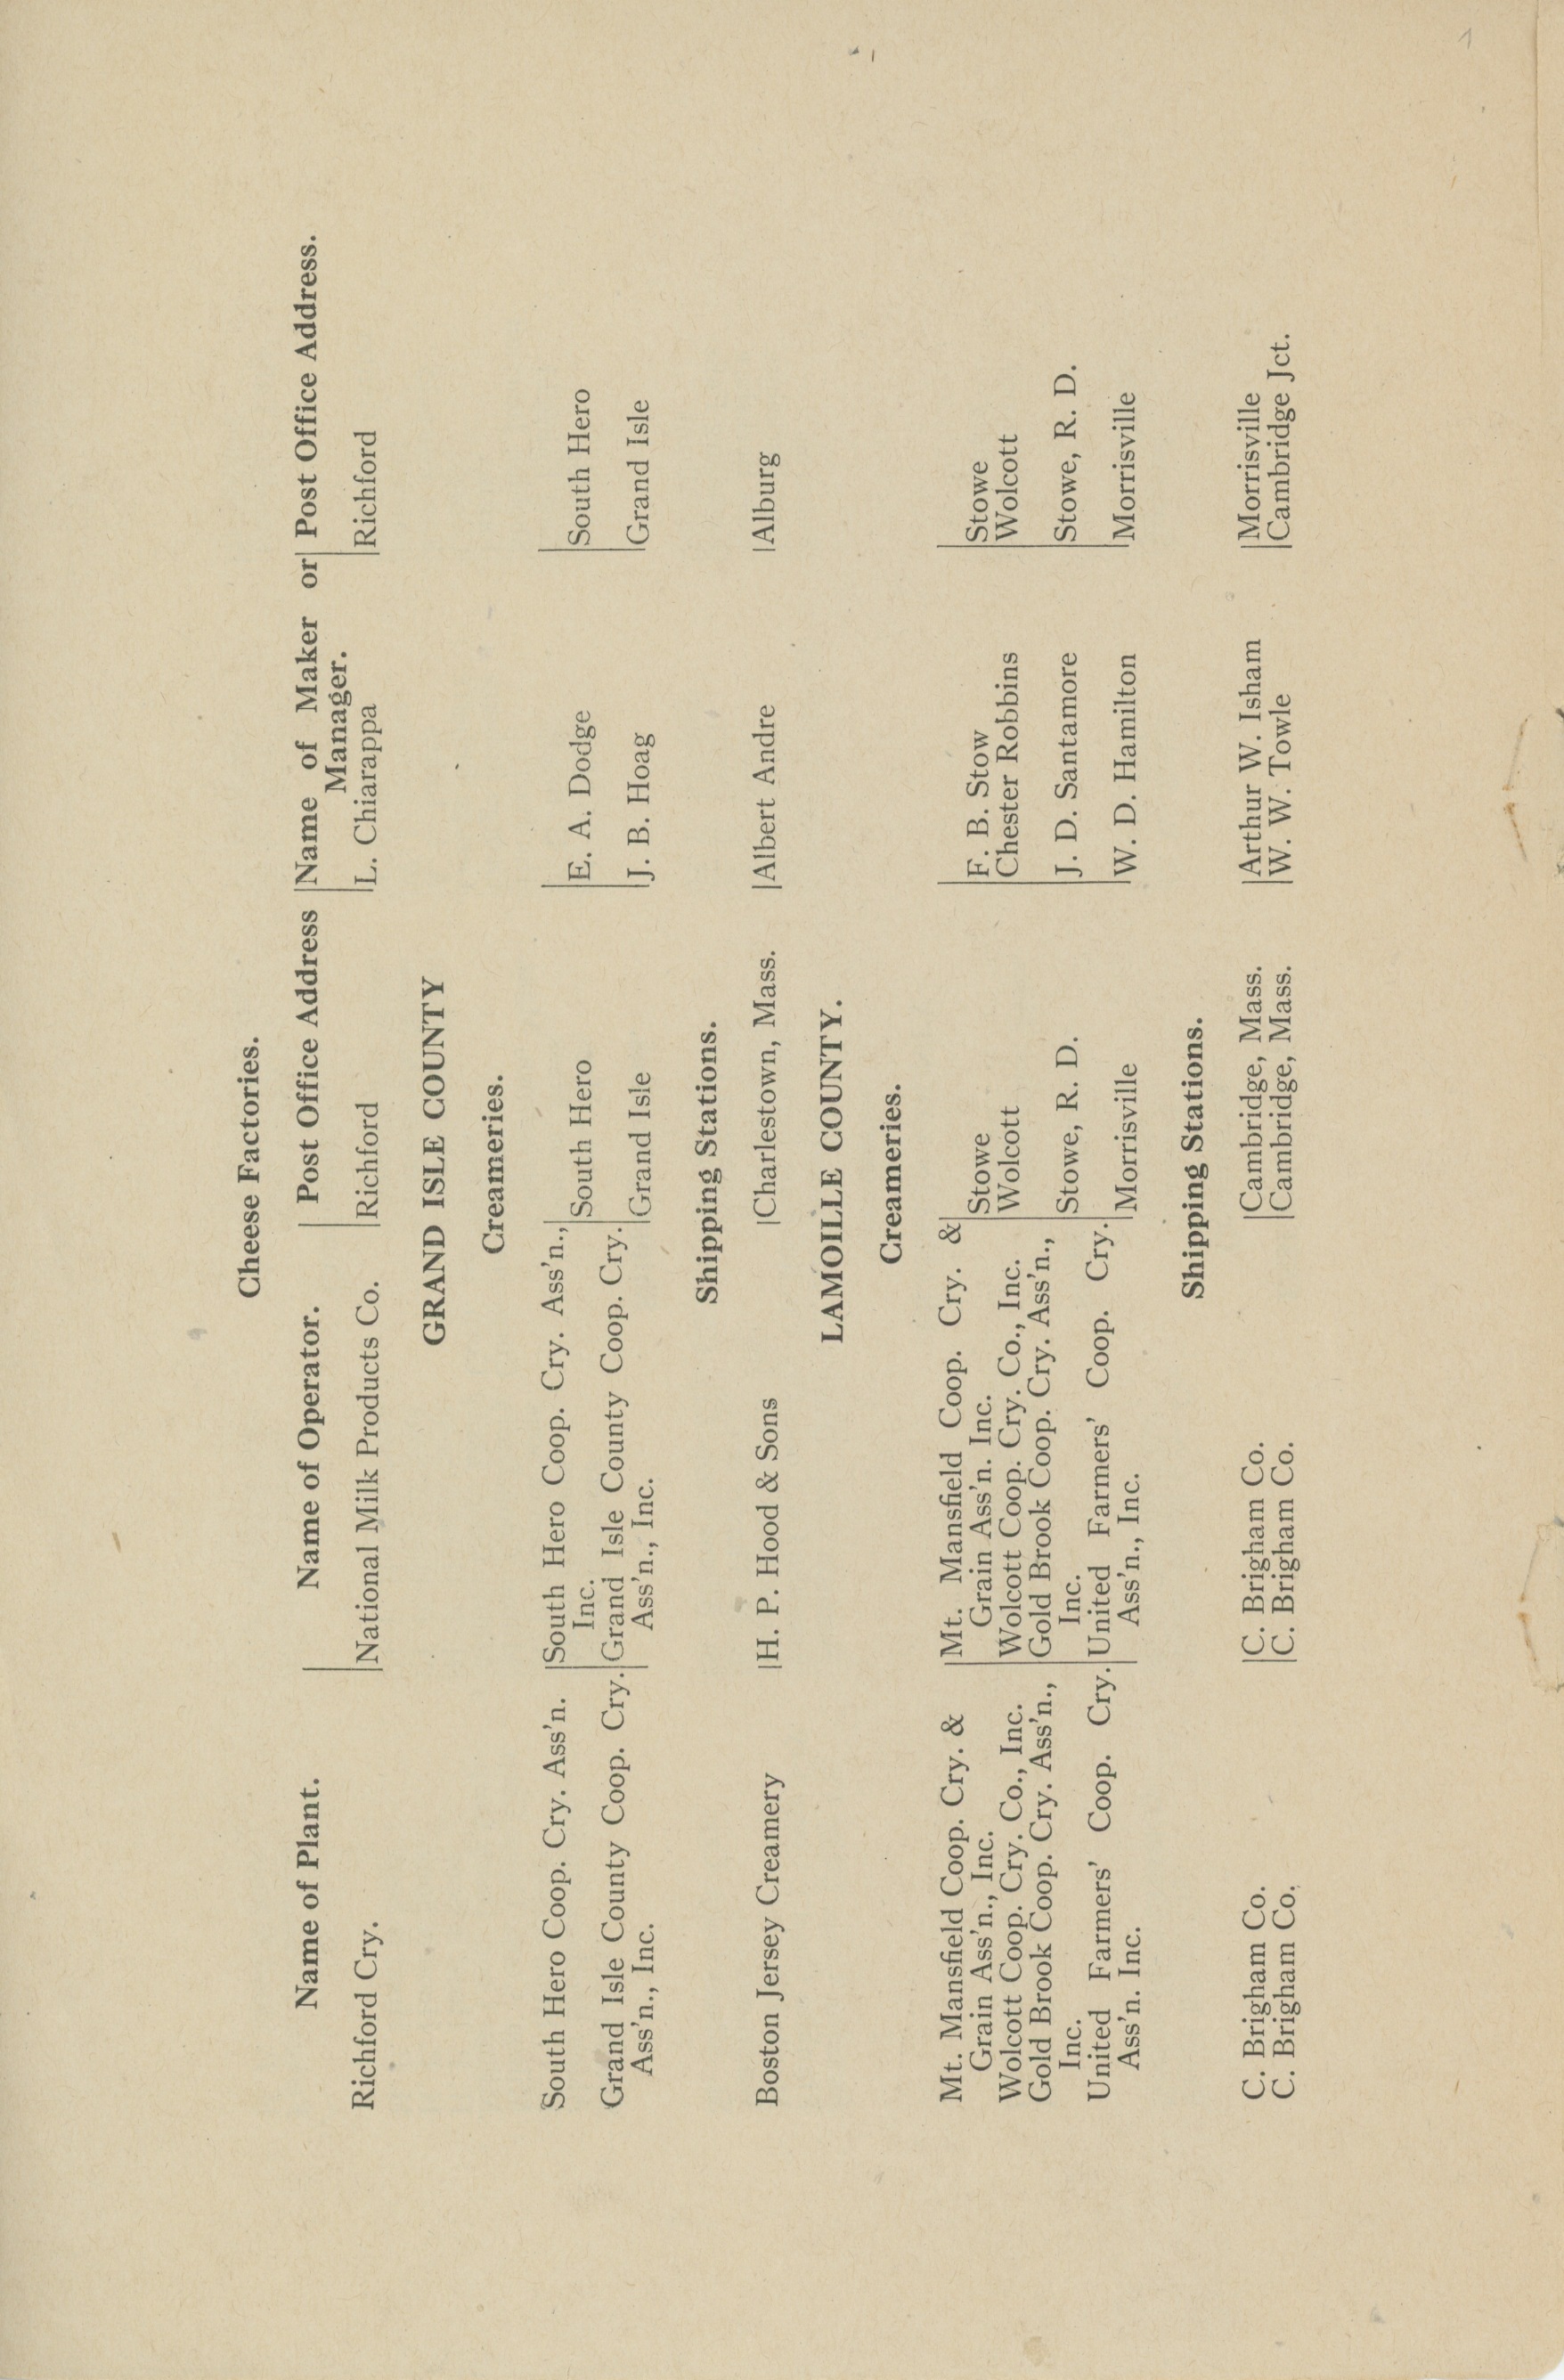 ced-1921-statedepartment-list of creameriespg5.jpeg